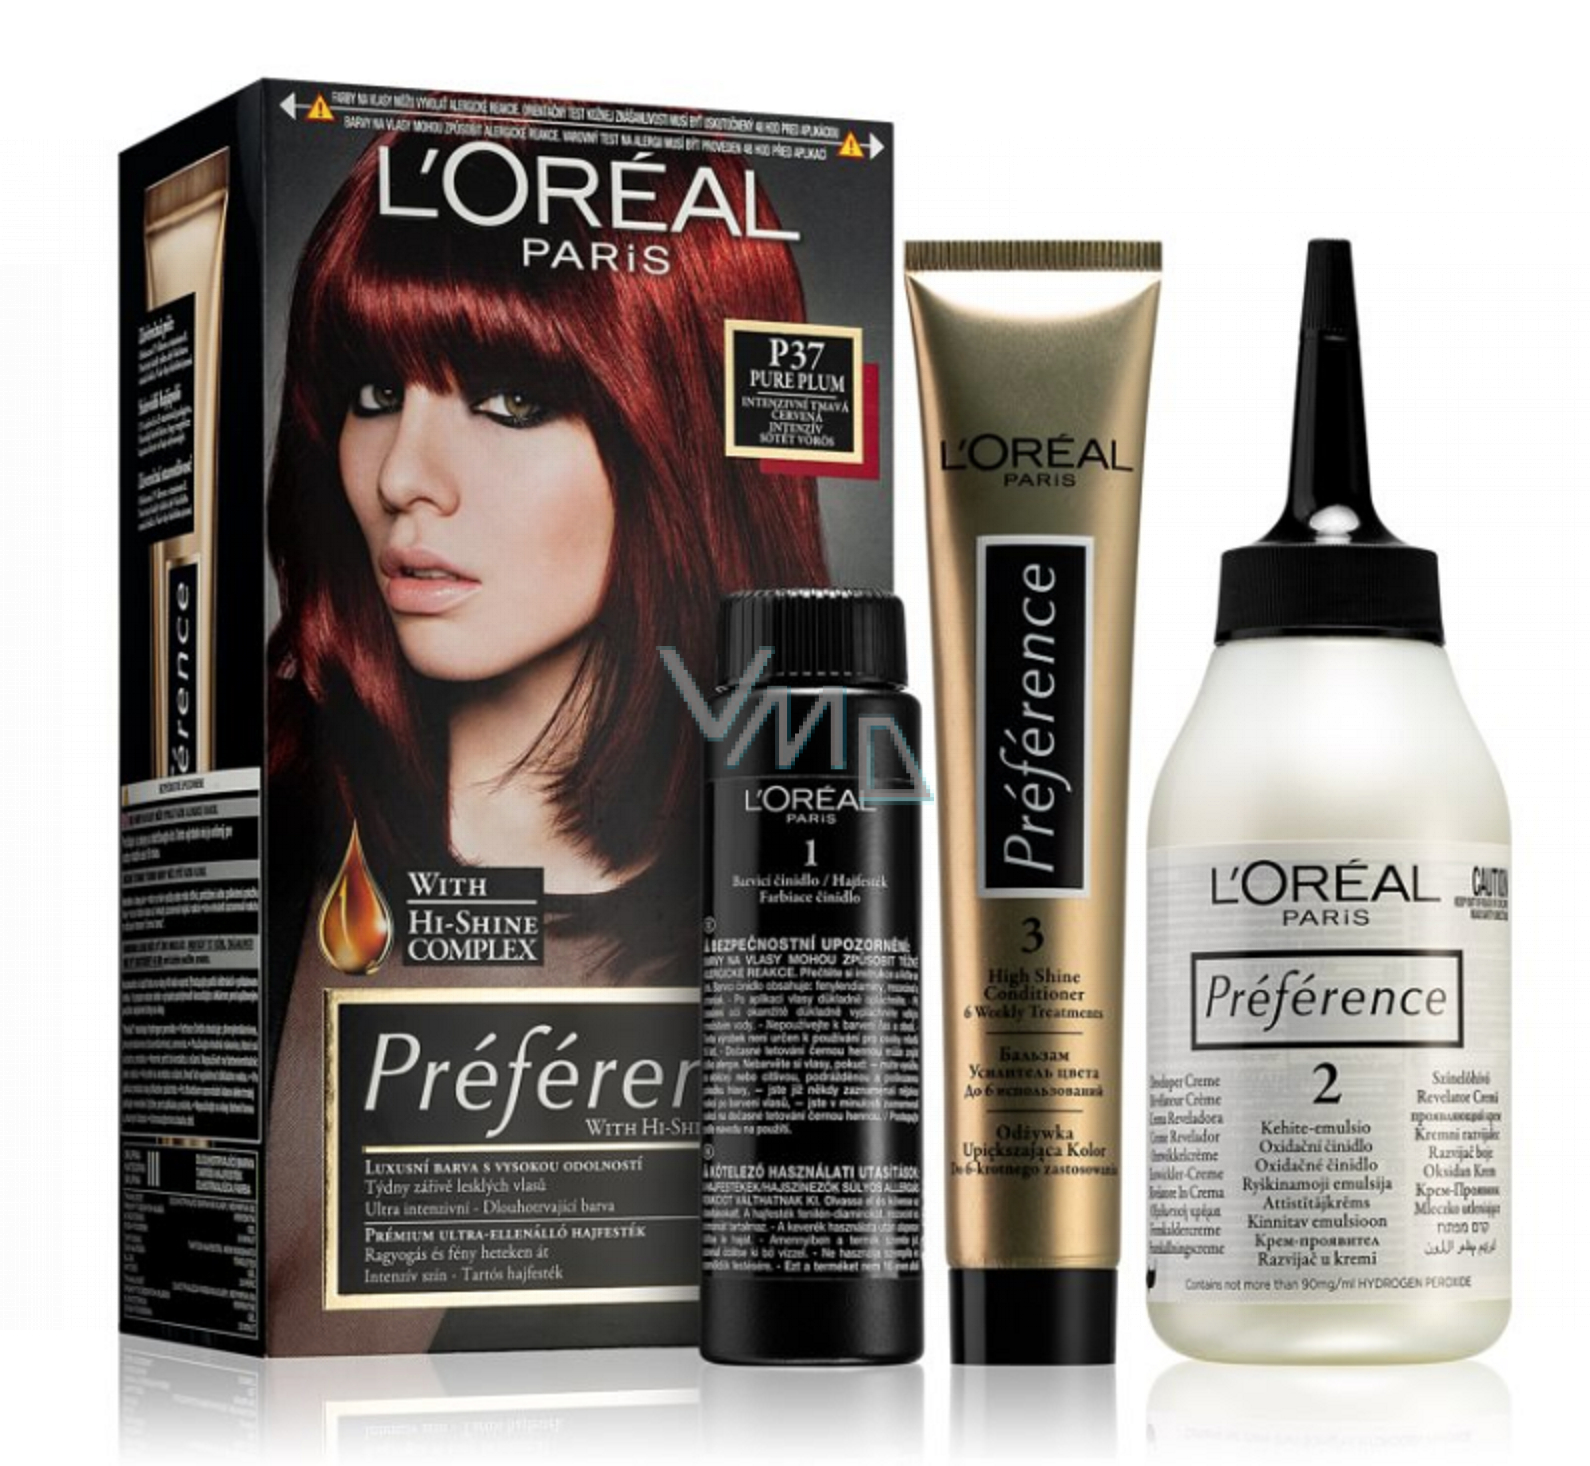 Лореаль косметика для волос. Лореаль p37. Loreal preference p37. Лореаль Pure Plum. Краска для волос лореаль p37.